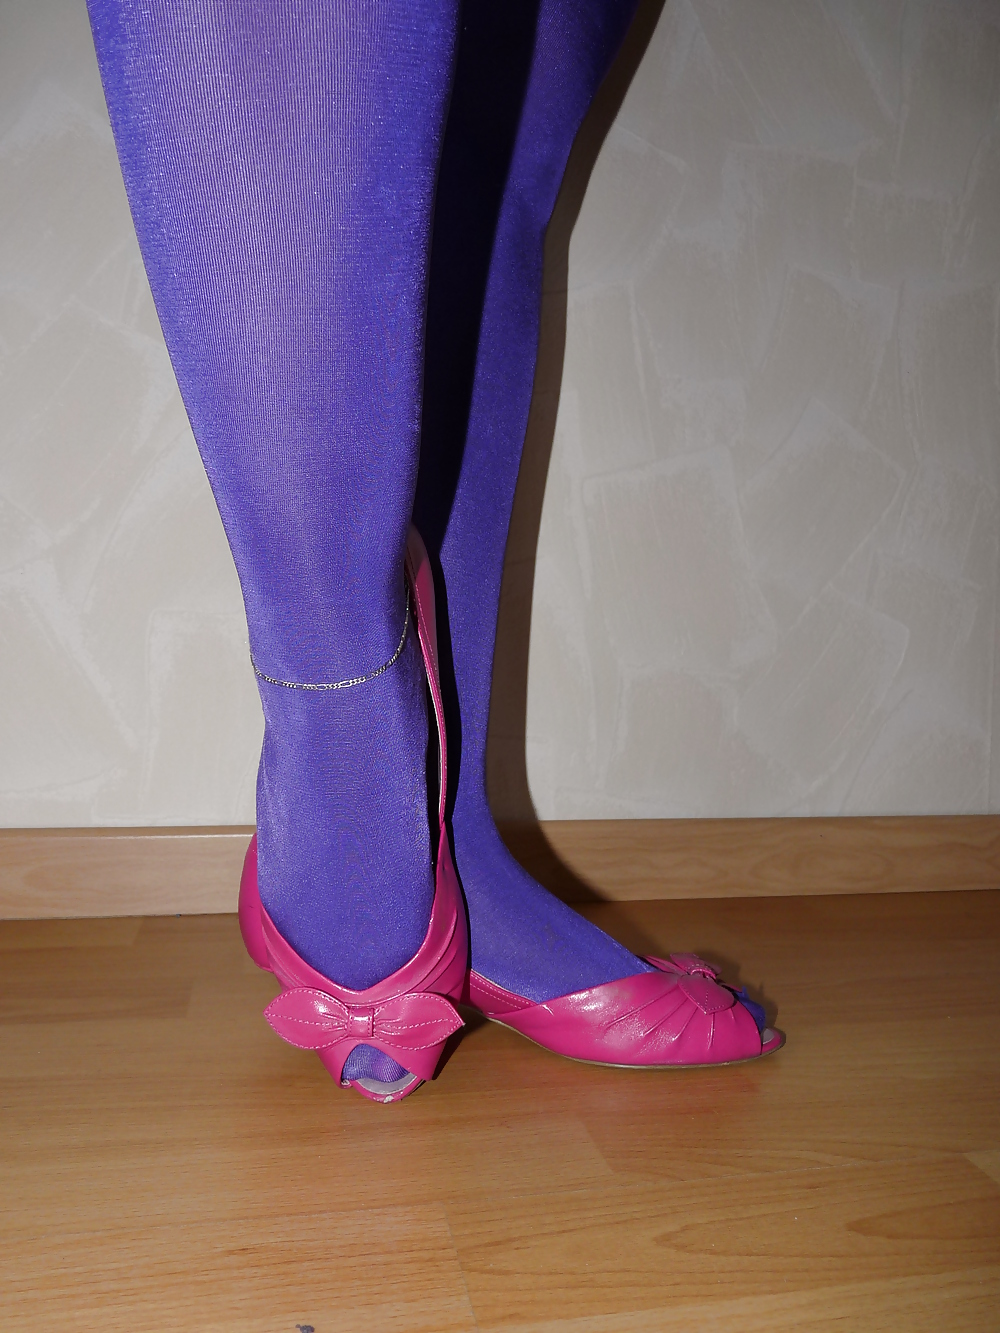 Porn image wifes shiny purple pantyhose pink peep toes